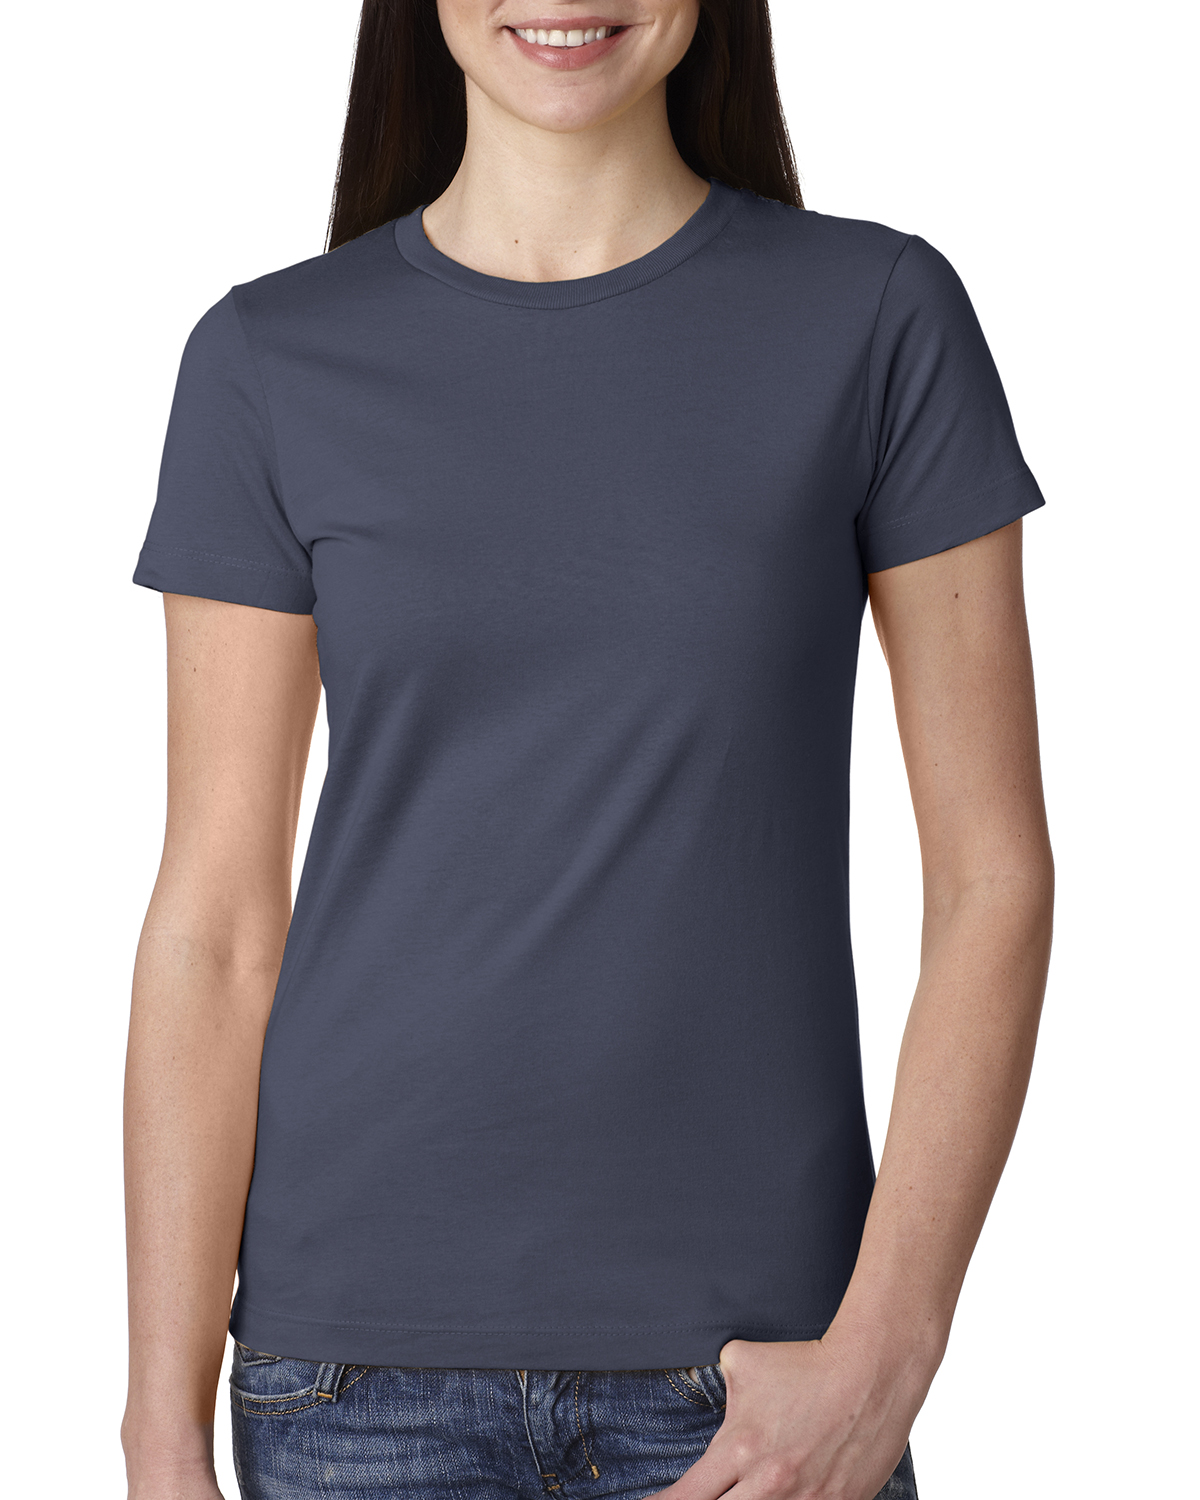 NEW Next Level Women's 100% Cotton XS-XL Boyfriend T-Shirt R-N3900 | eBay